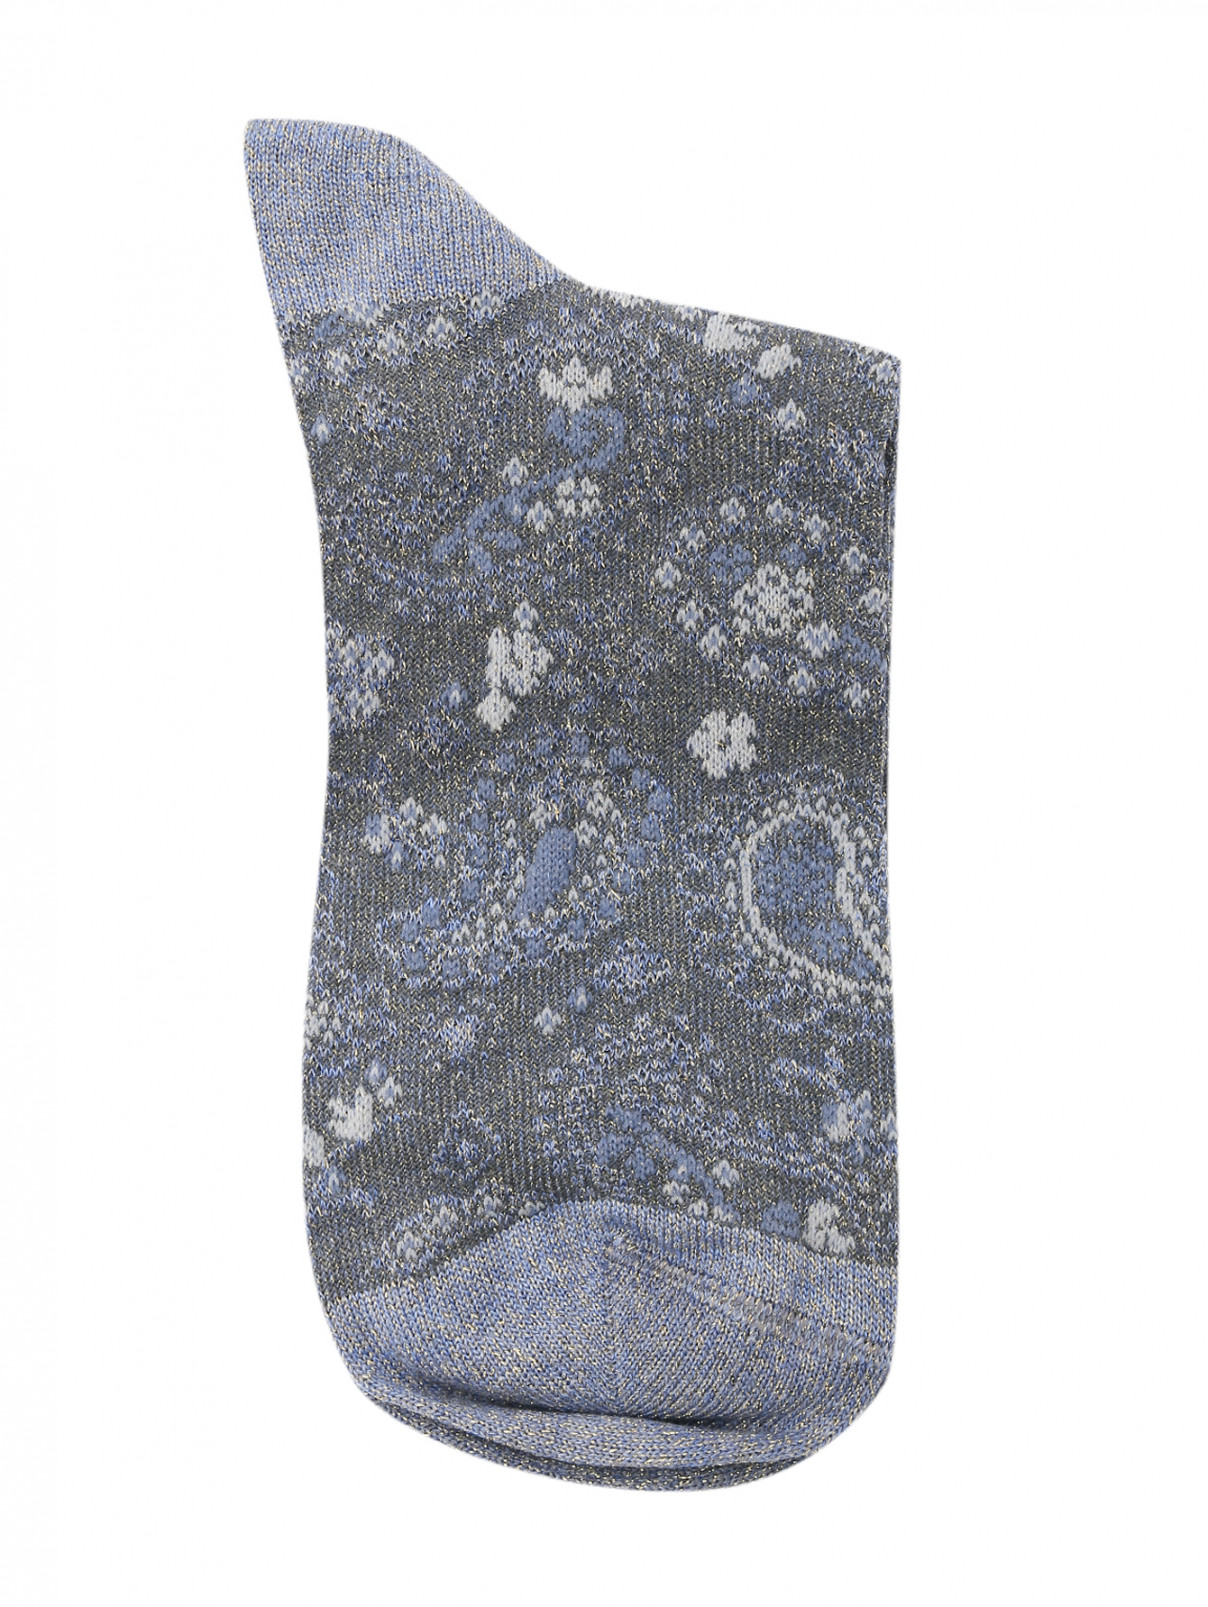 Носки с узором "пейсли" ALTO MILANO  –  Общий вид  – Цвет:  Синий